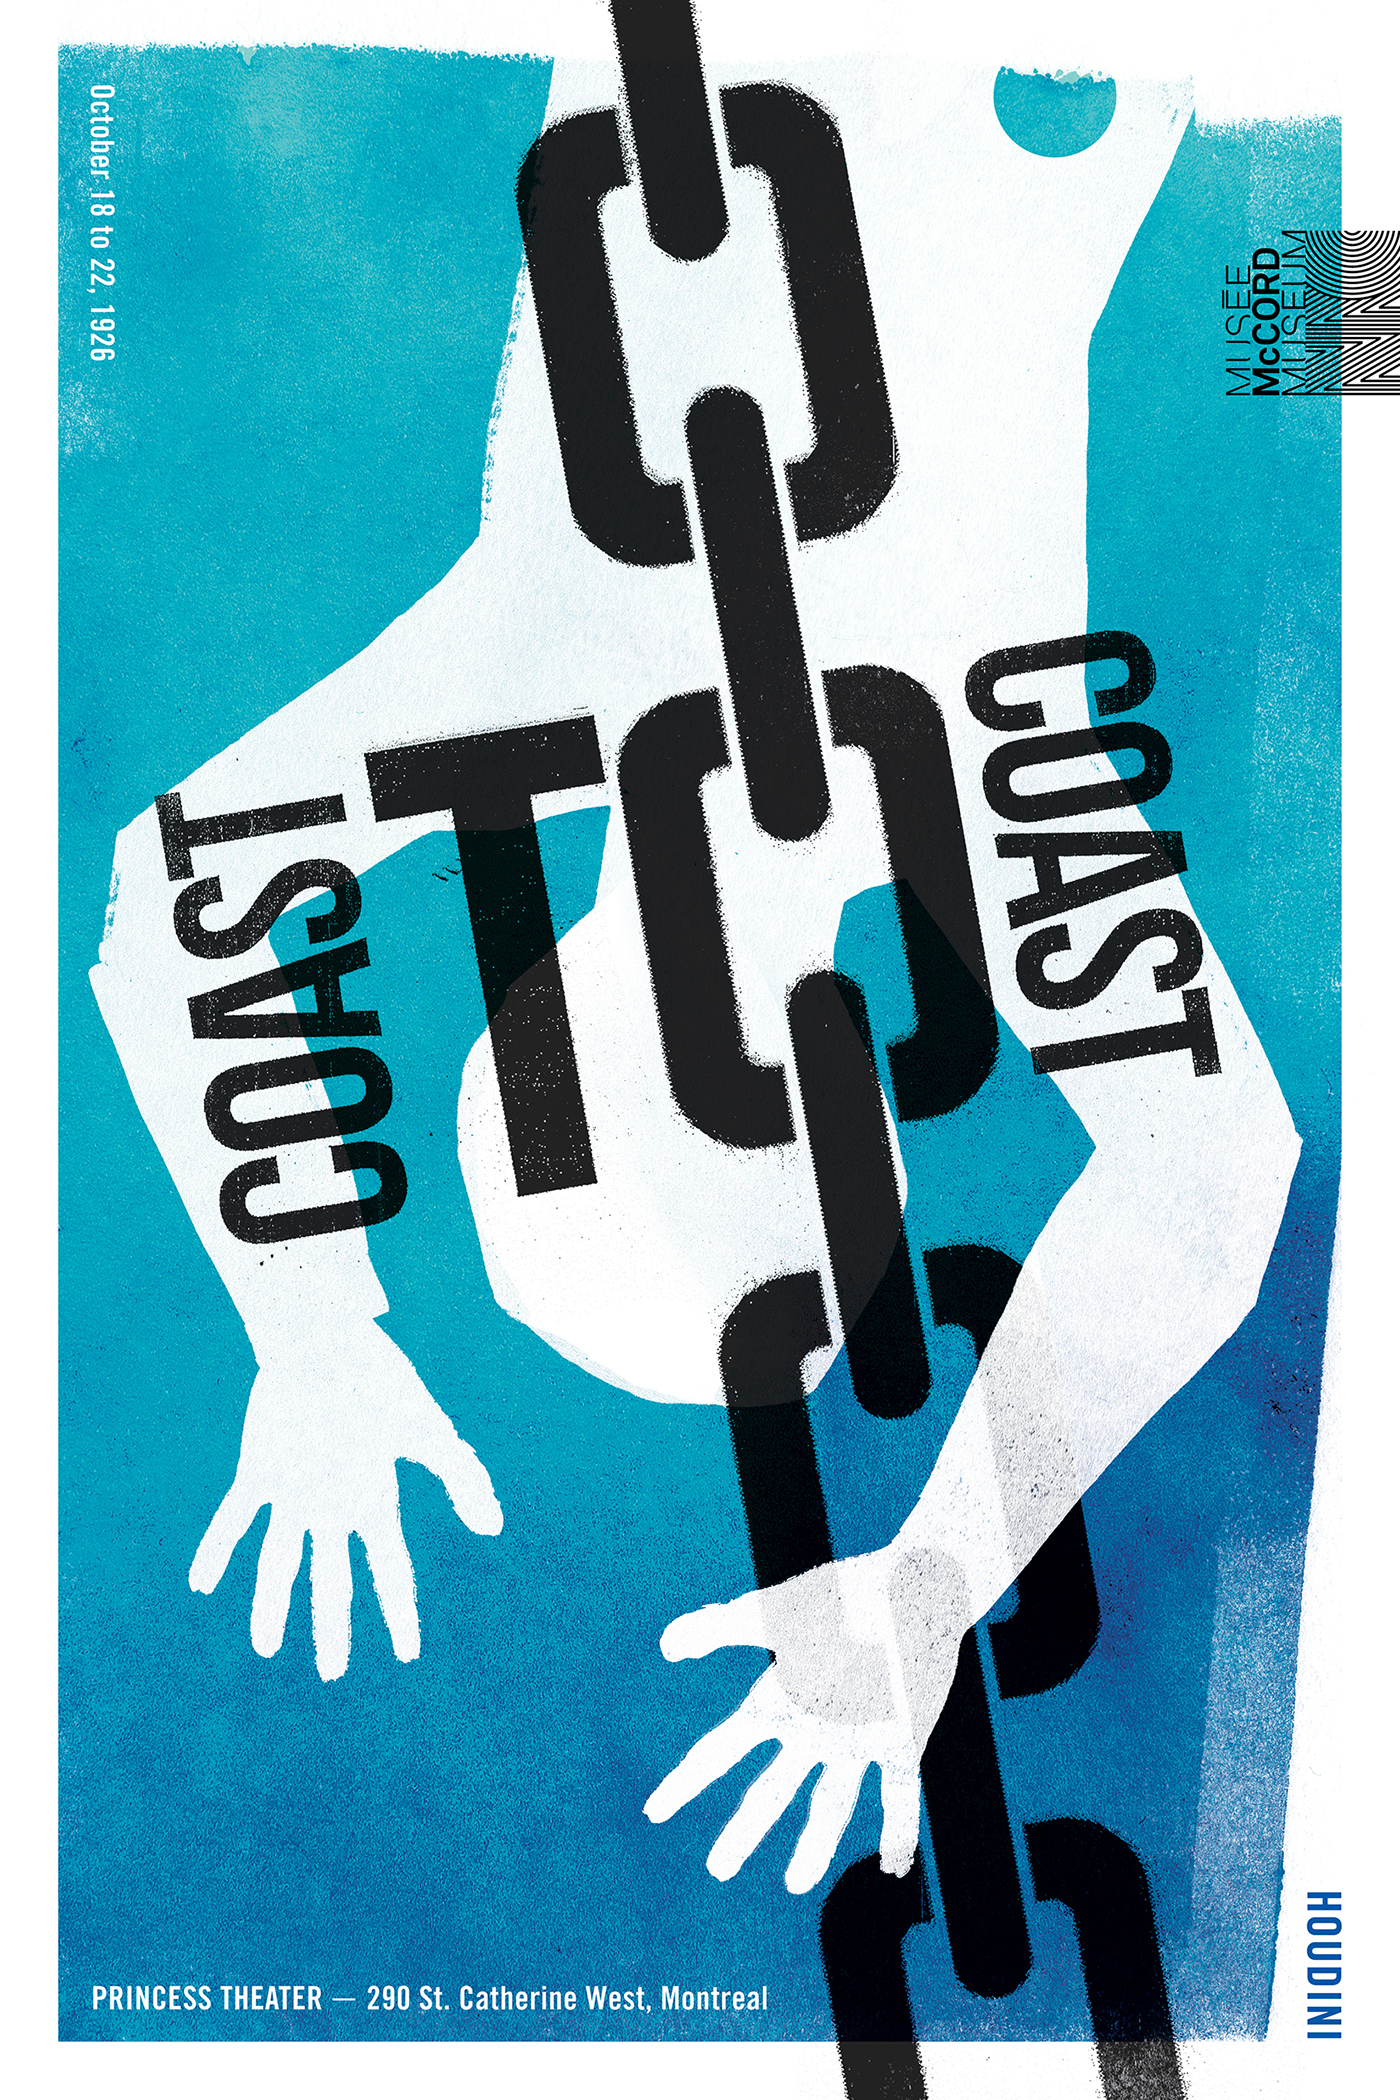 Musée McCord - Concours d'affiche - Houdini - Le dernier spectacle poster Montreal affiche